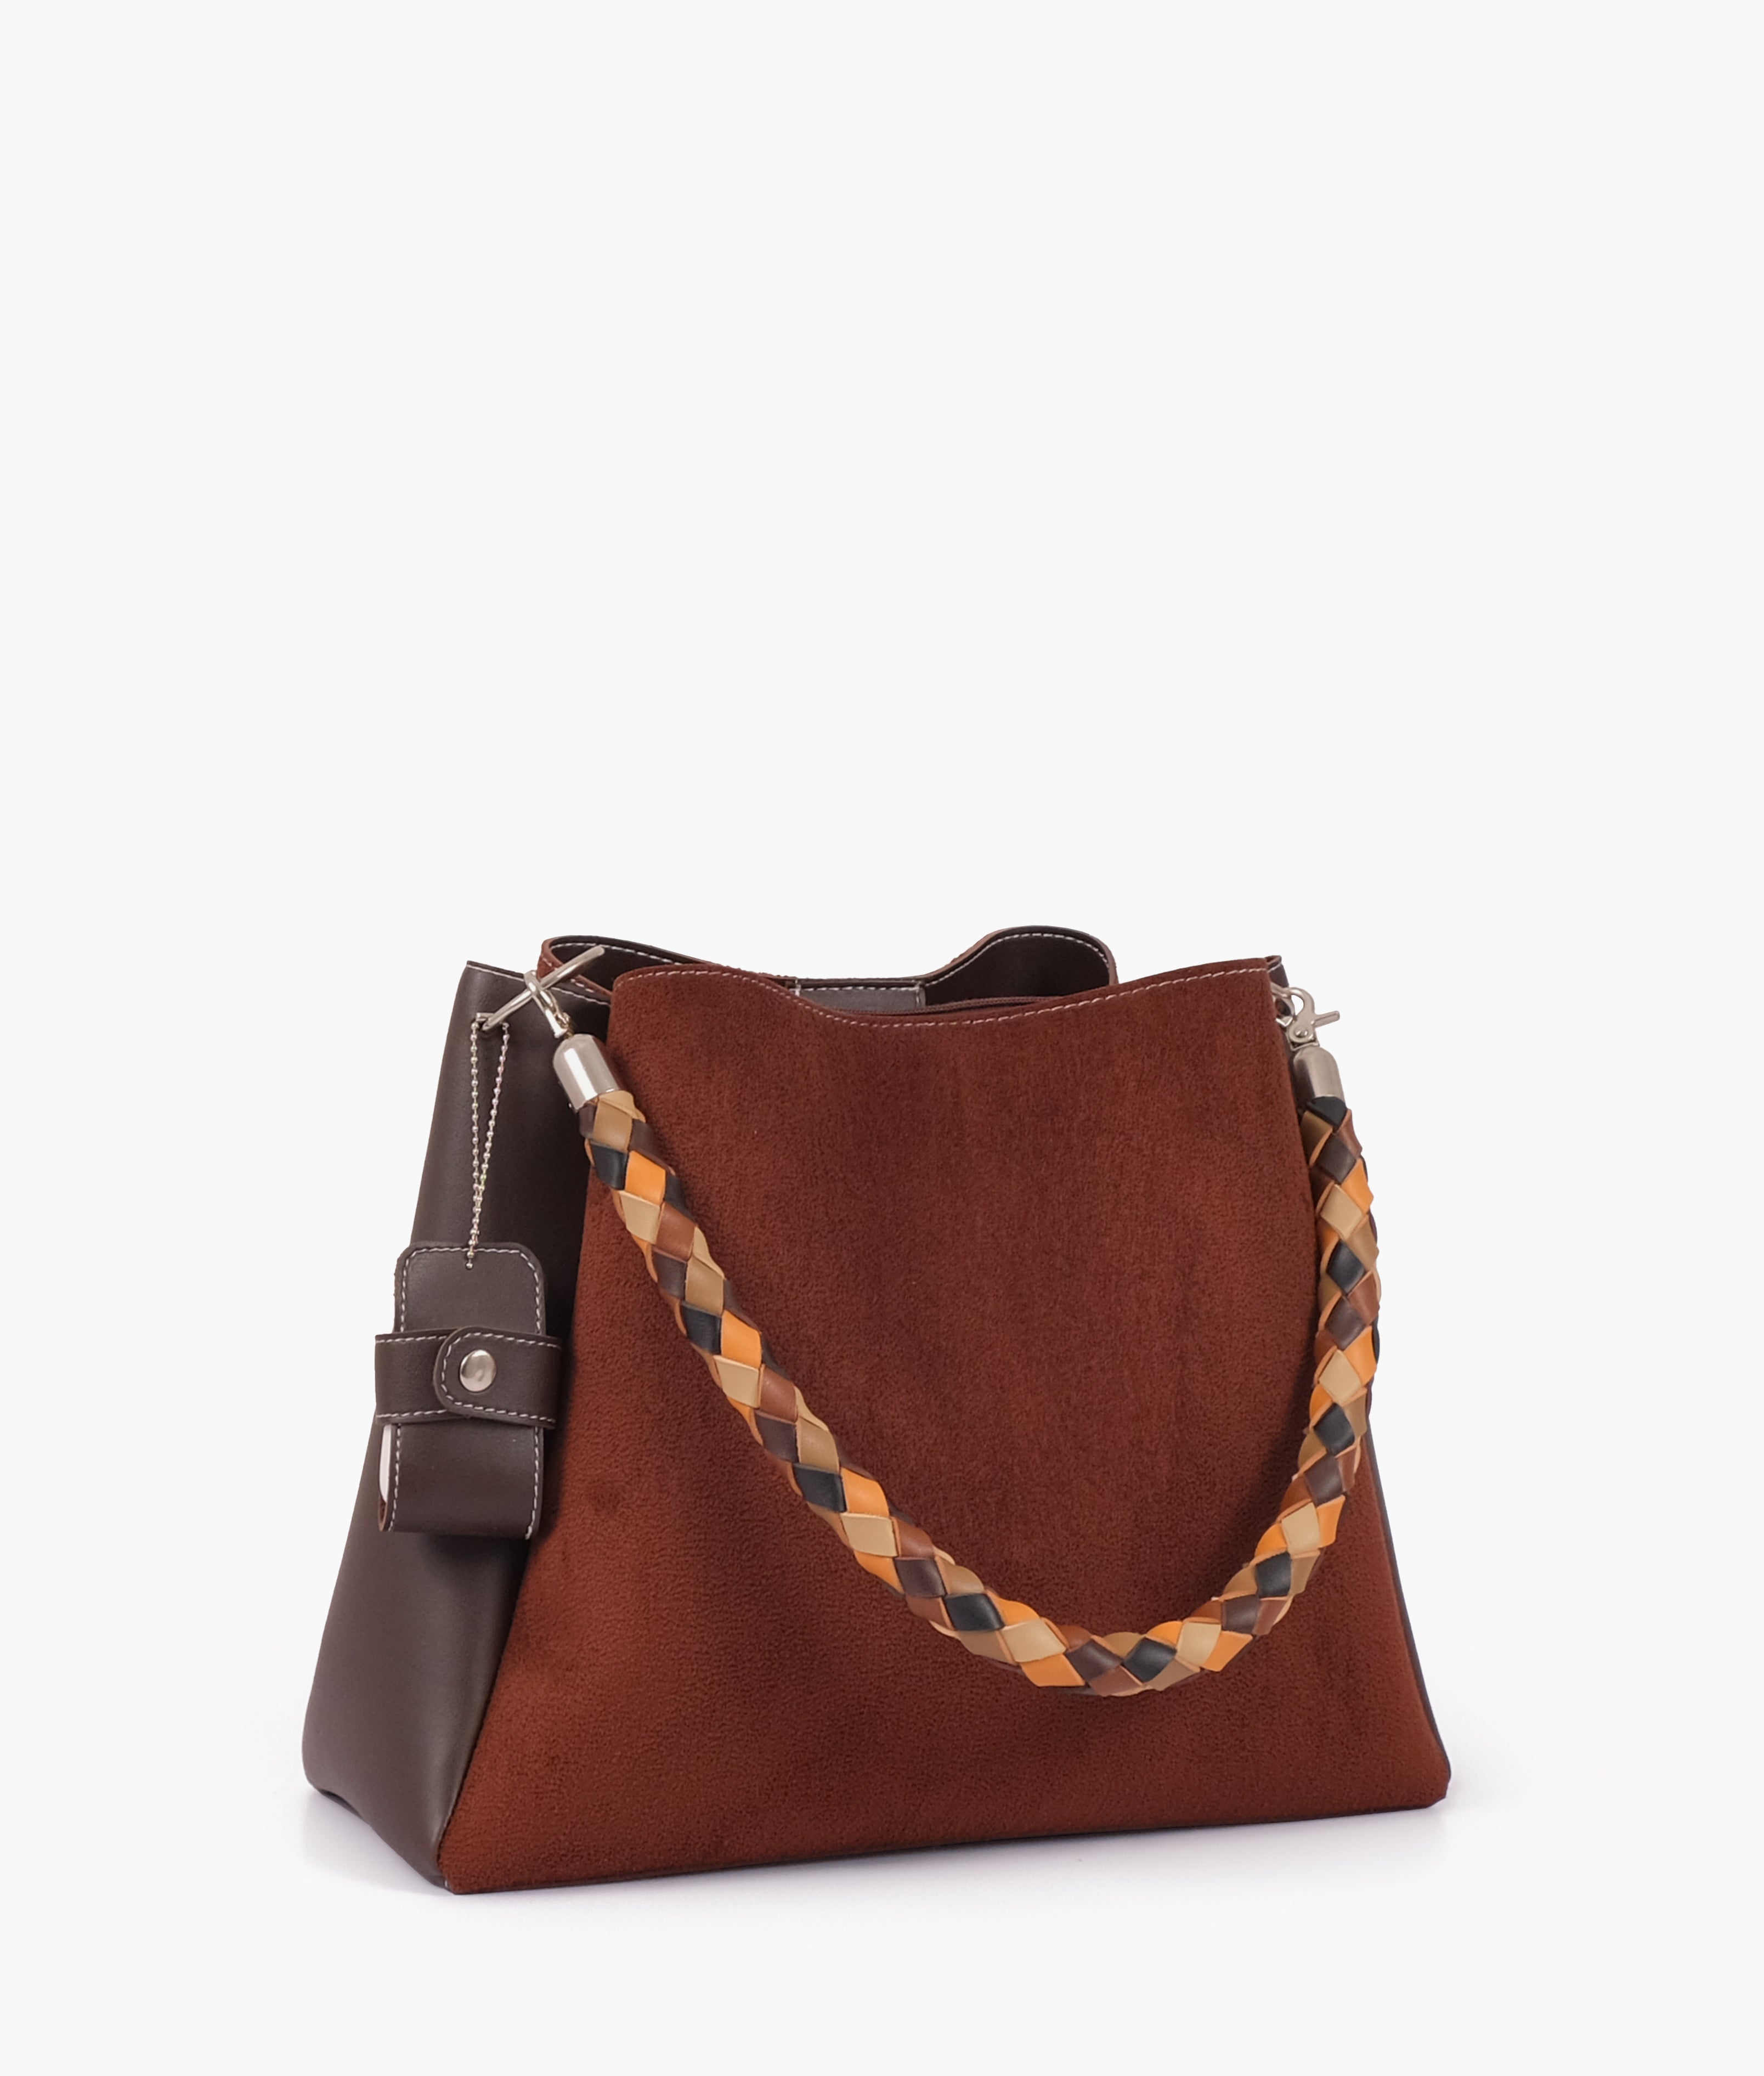 Dark brown suede handbag with braided handle